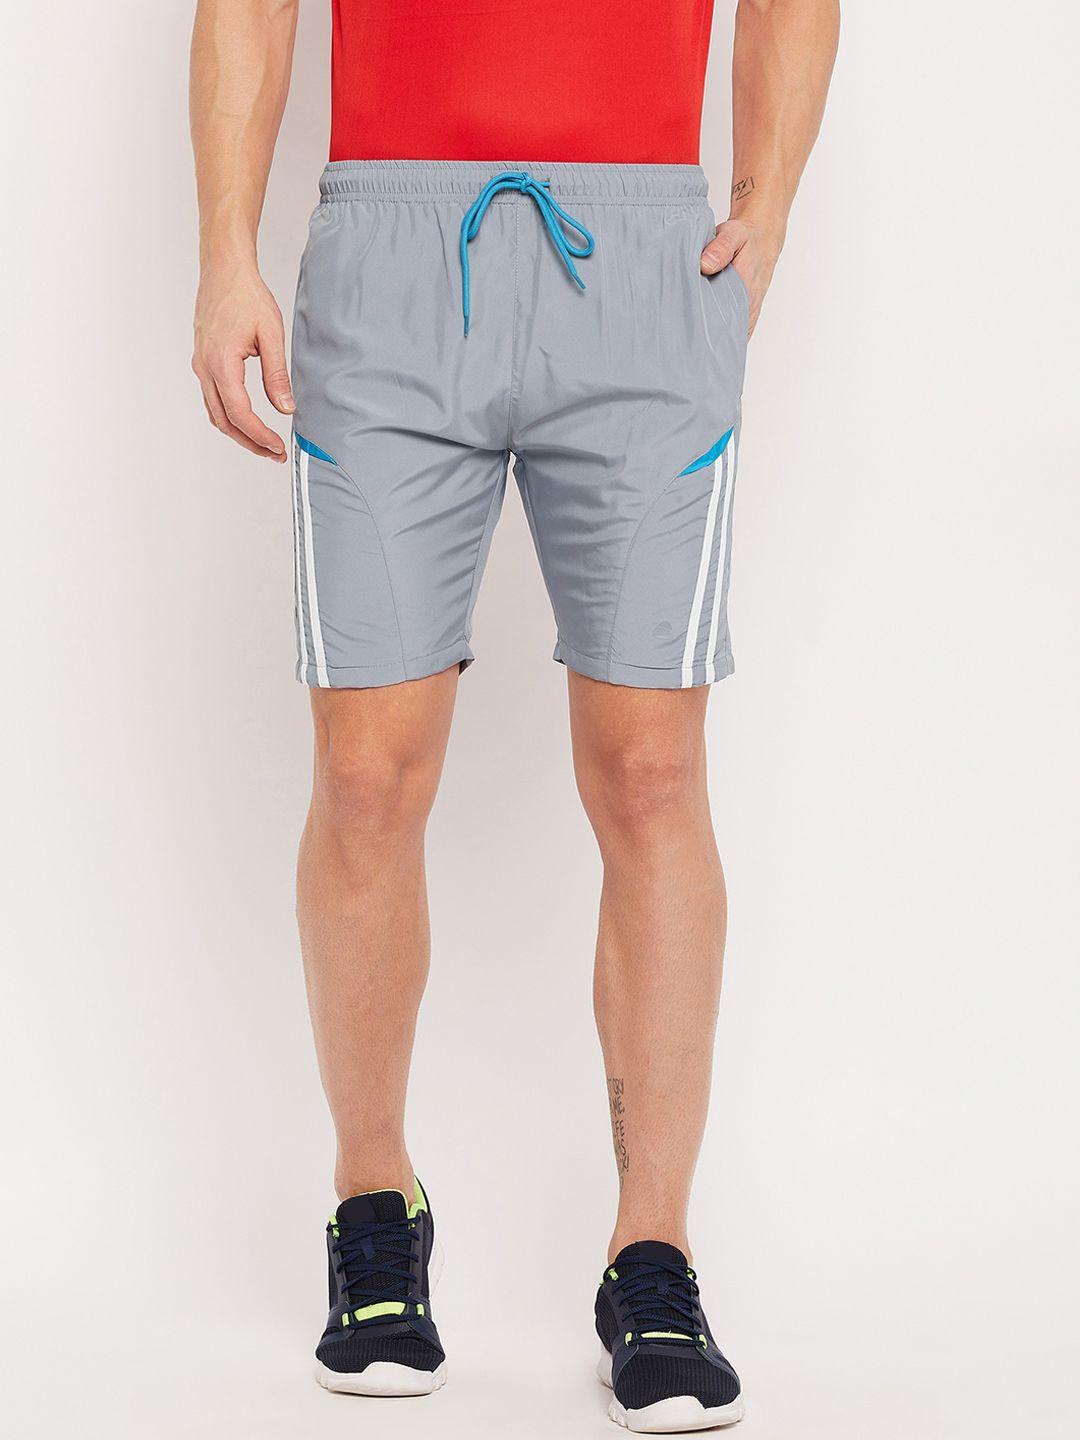 duke-men-grey-striped-slim-fit-shorts